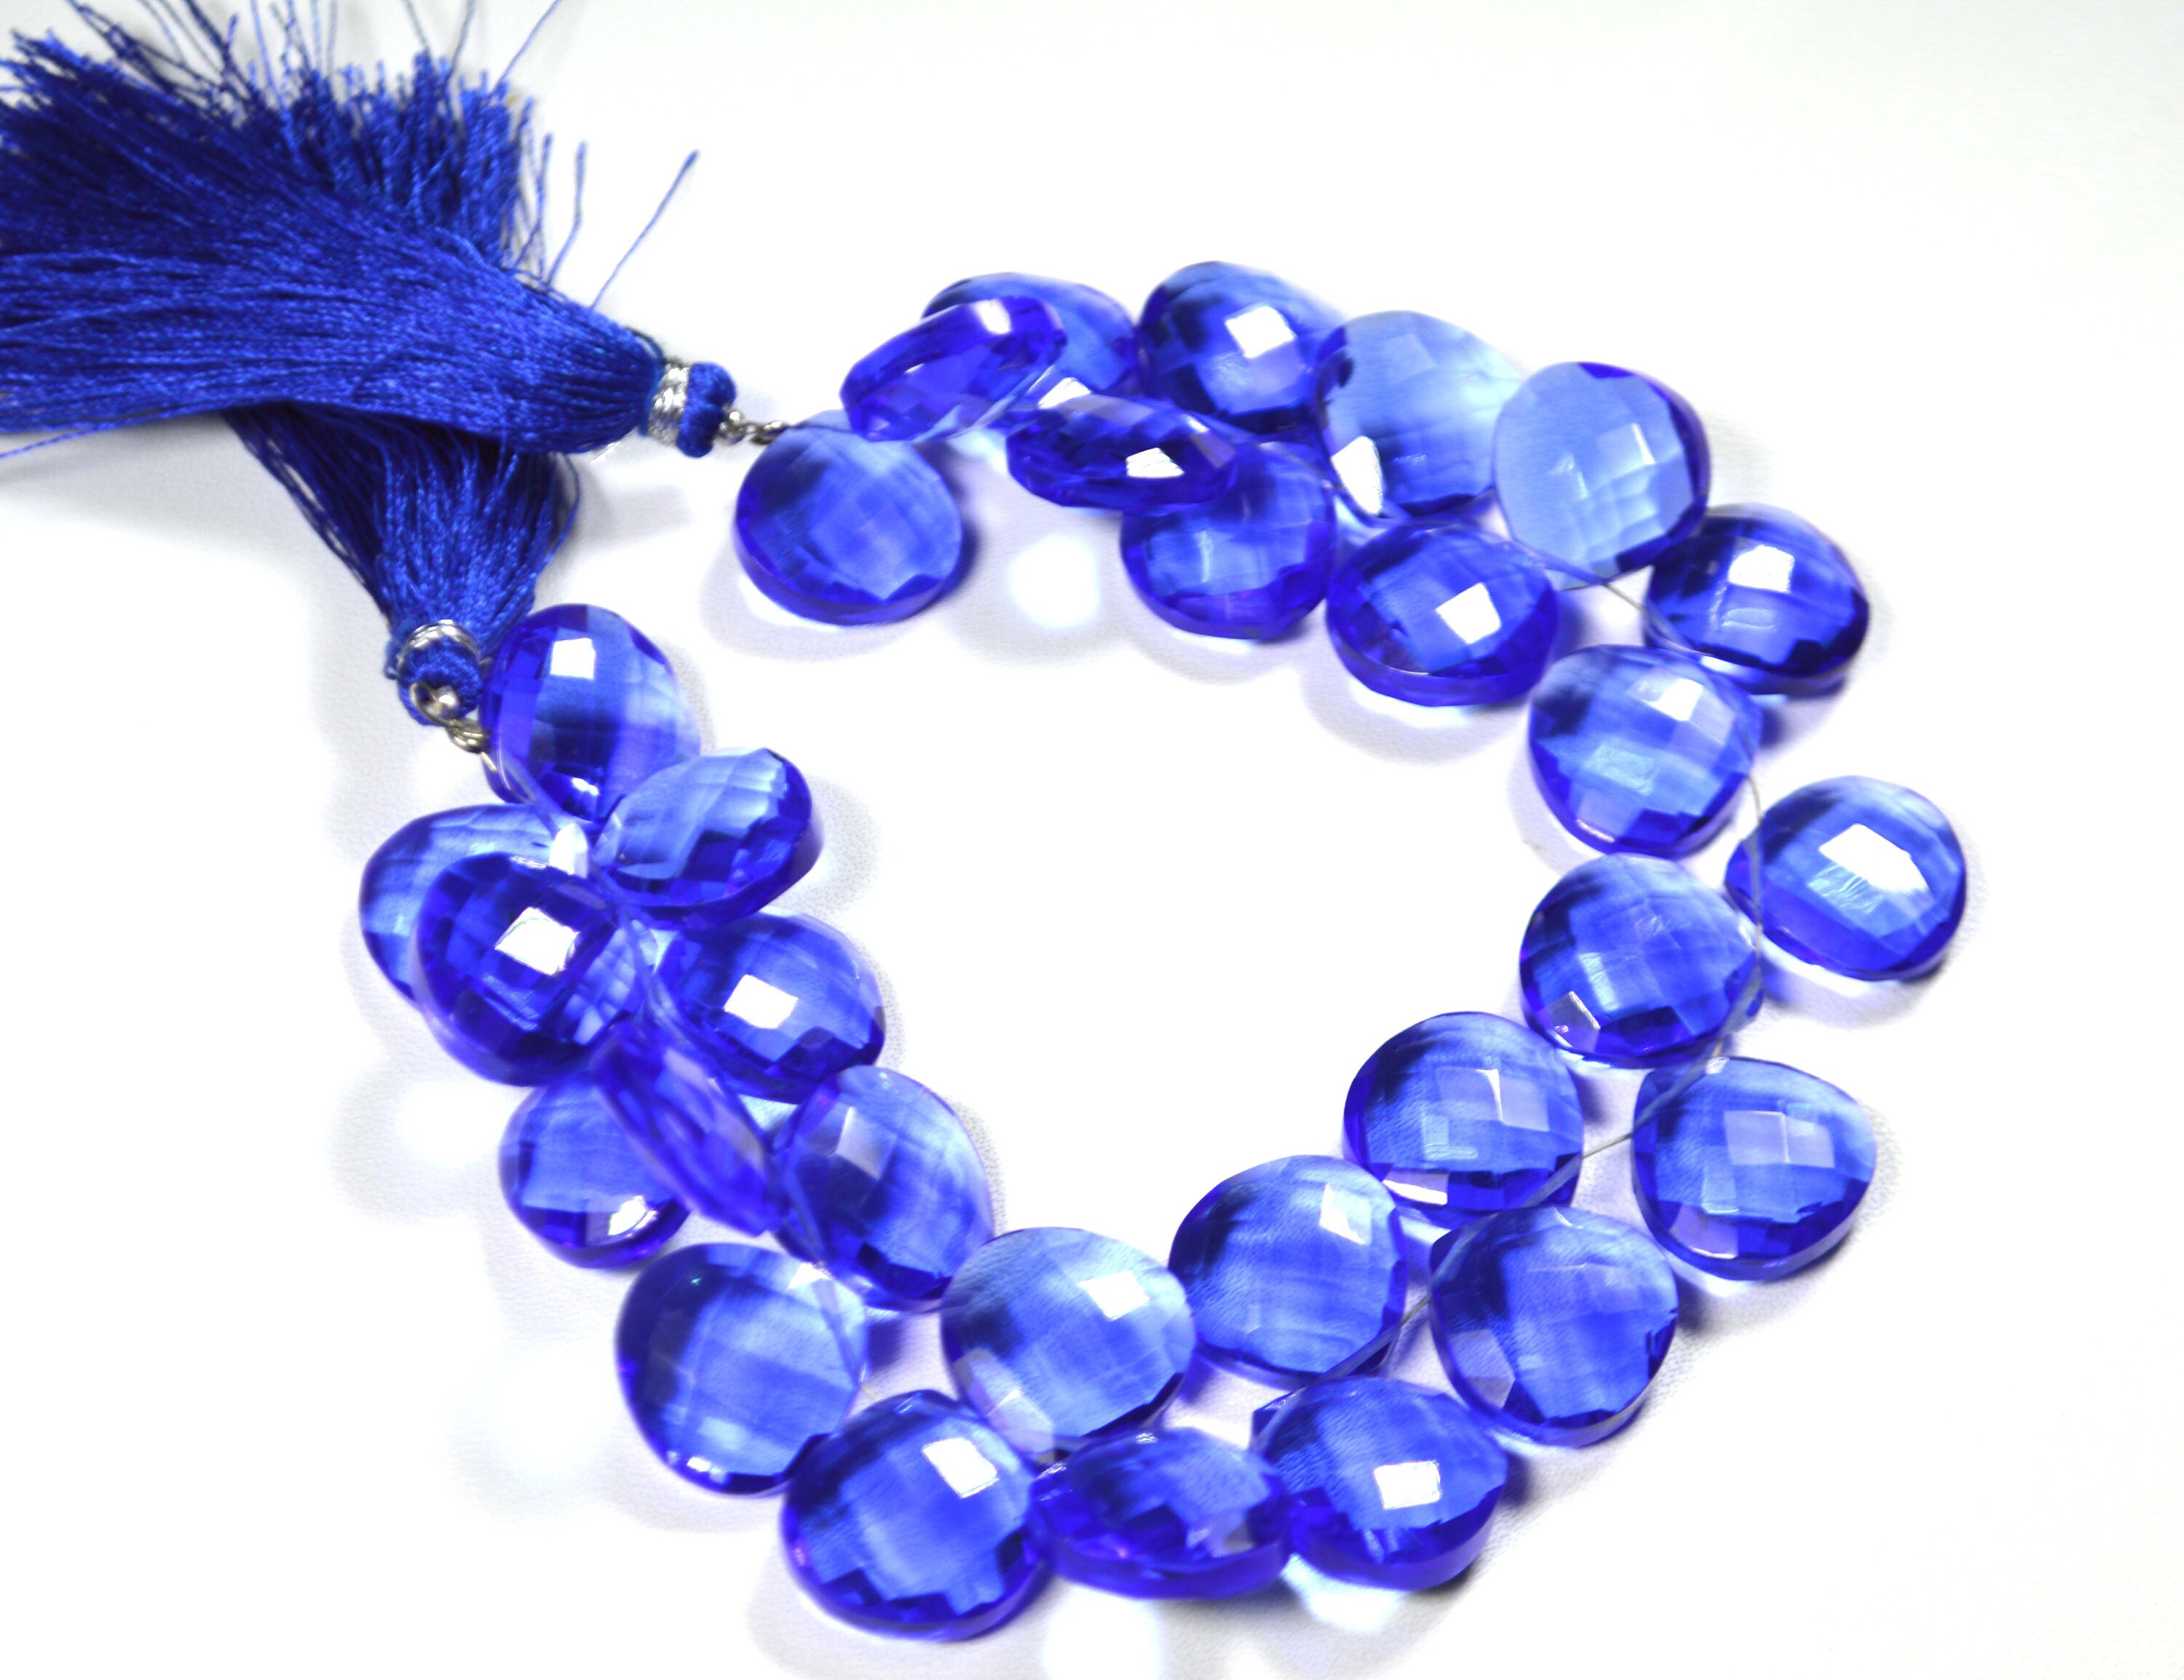 Natural Kyanite Faceted Tear Drop Shape Briolettes~~~11mmx5mm-7mmx5mm~~Blue Kyanite Tear Drop Beads~~7 Inch